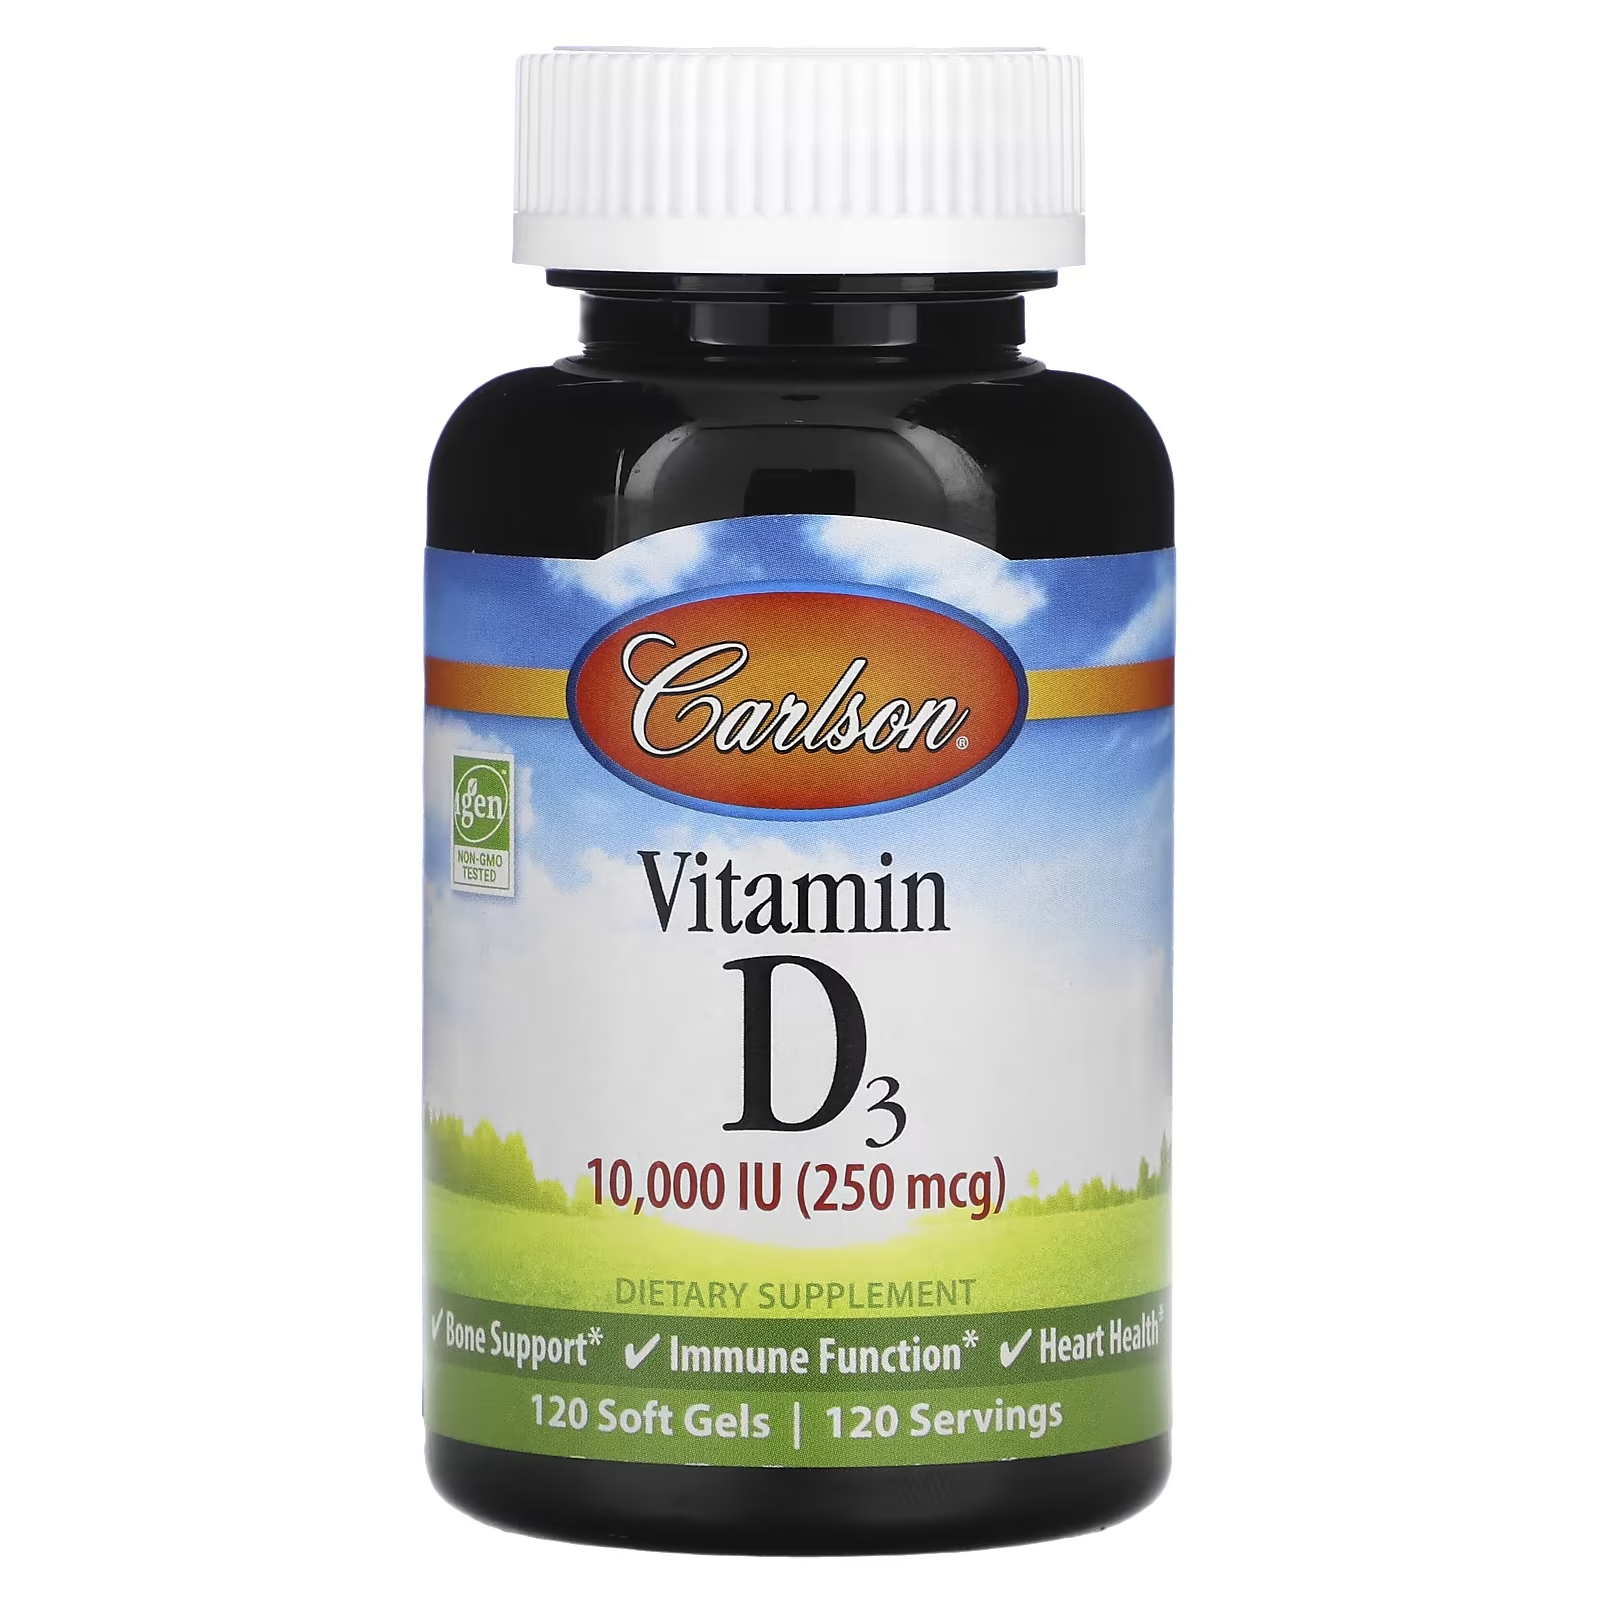 Витамин D3, 250 мкг (10 000 МЕ) Carlson, 120 мягких капсул витамин а 25 000 ме carlson labs 120 капсул добавка для иммунитета зрения кожи ретинол для взрослых мужчин и женщин